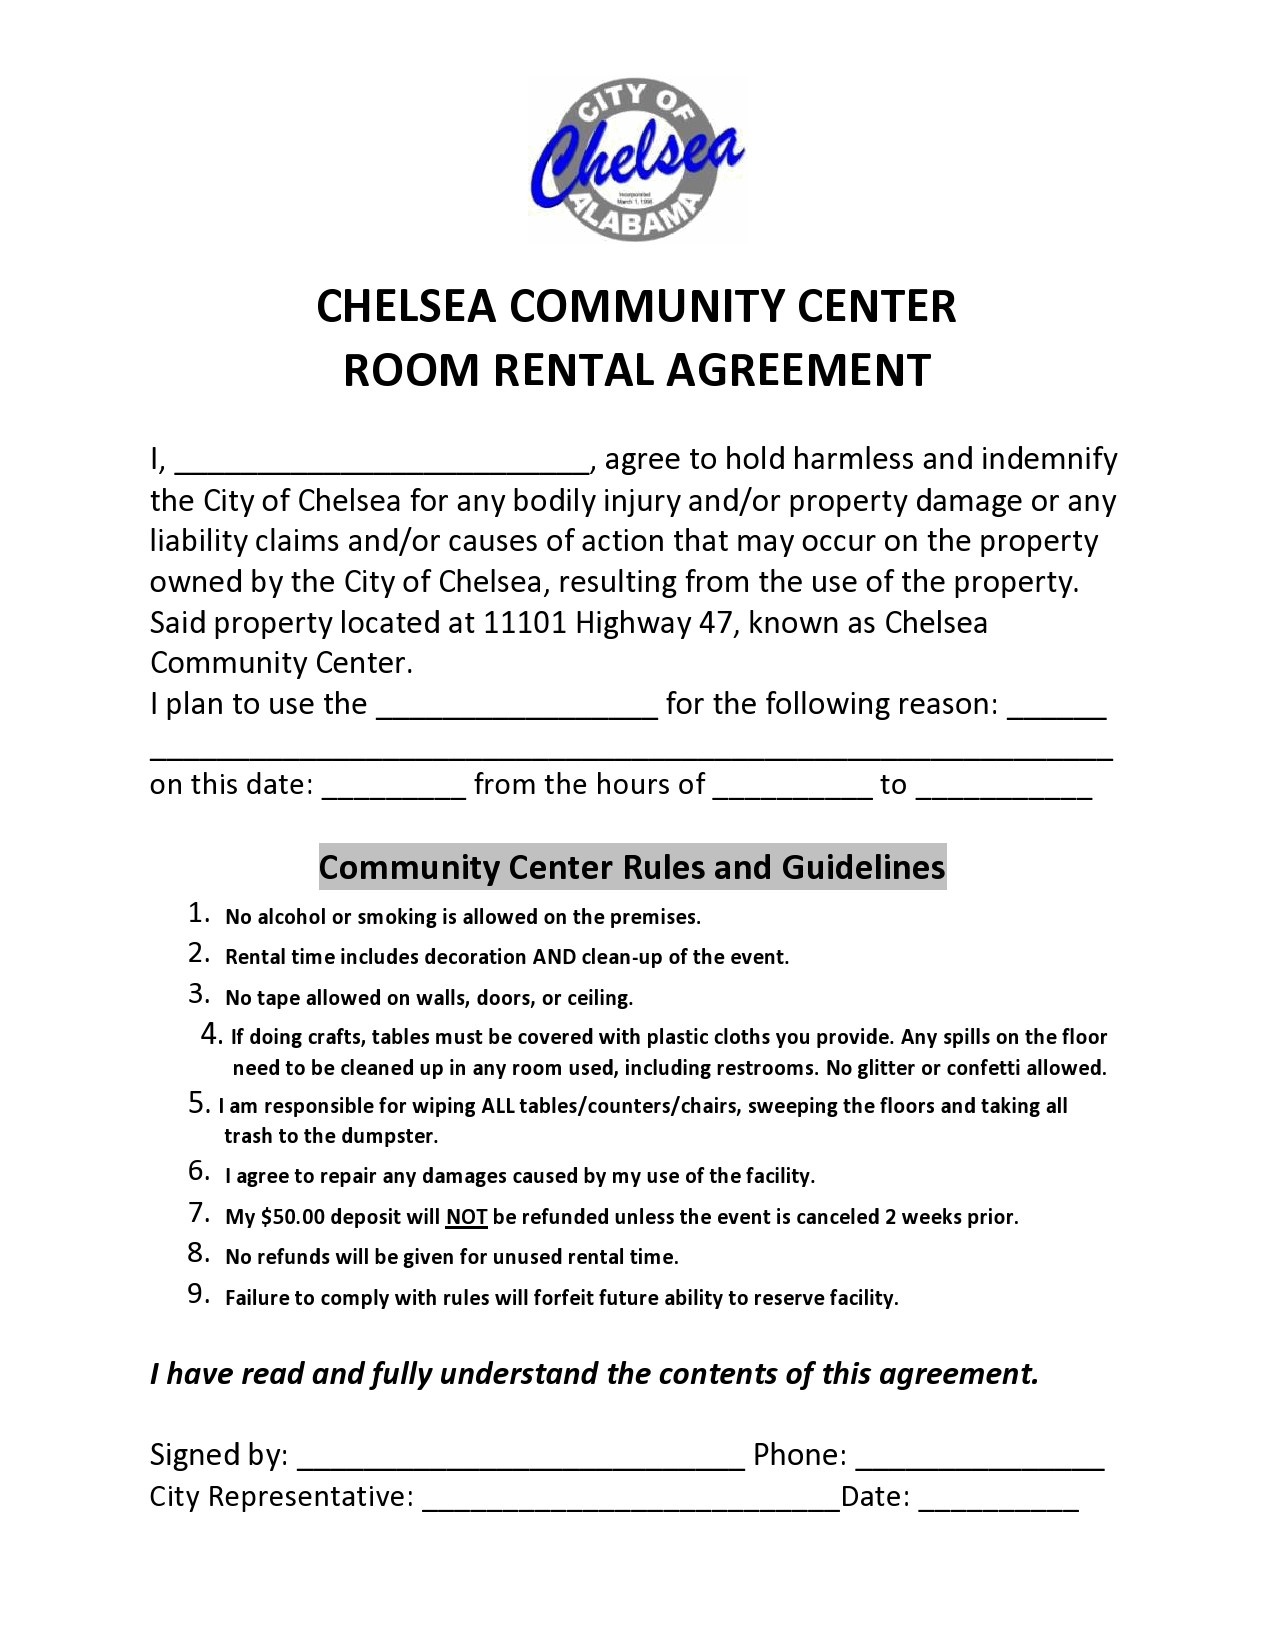 Free room rental agreement 20